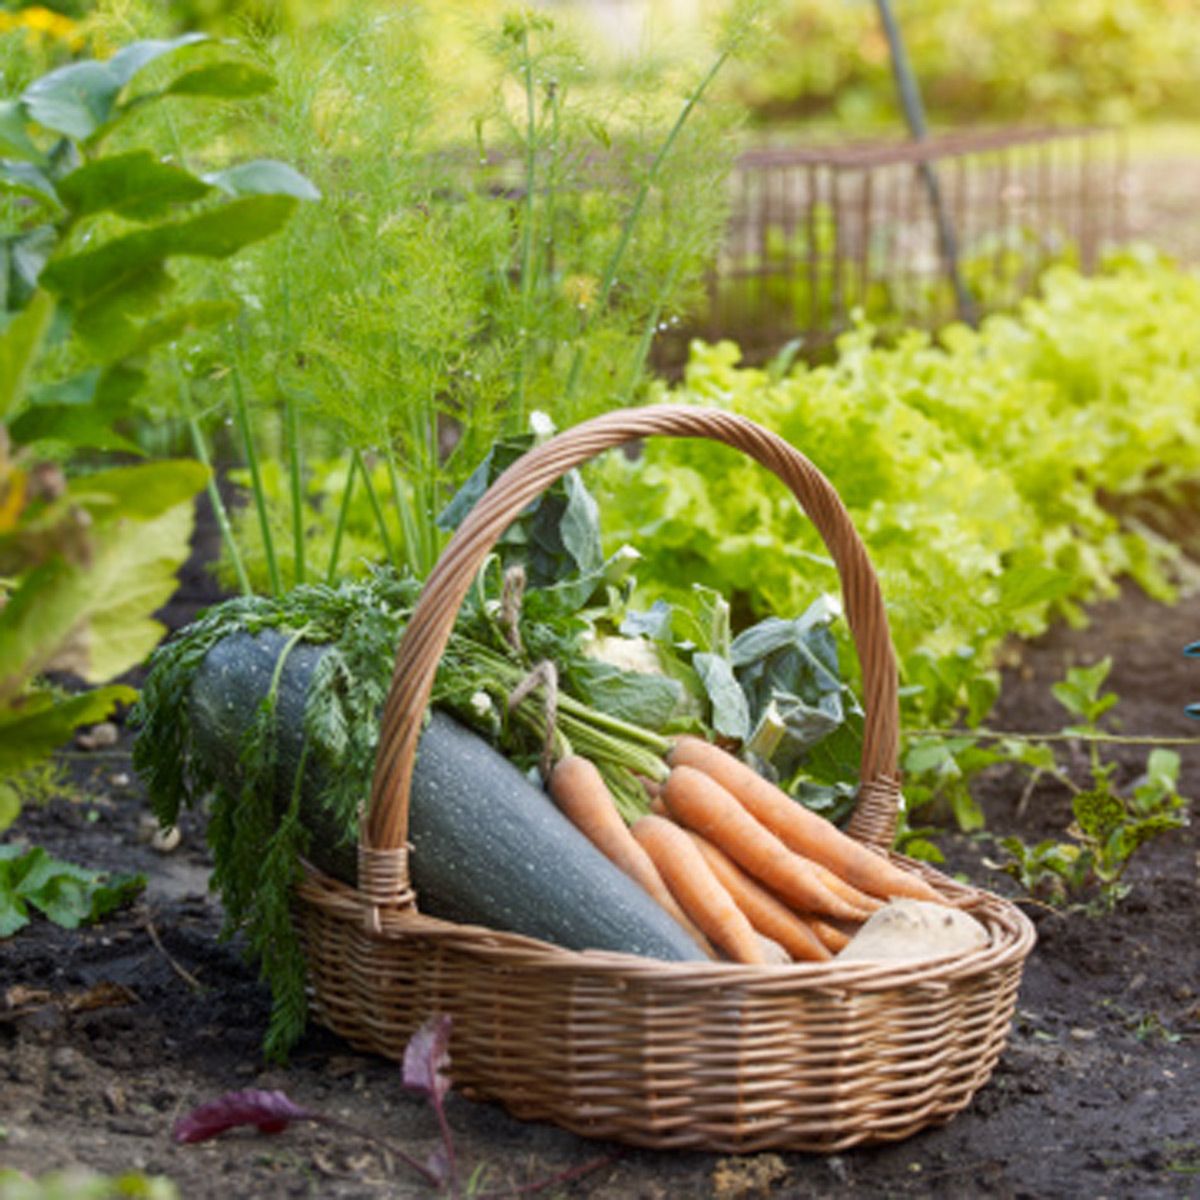 Ingredient, Whole food, Produce, Natural foods, Local food, Basket, Storage basket, Vegetable, Vegan nutrition, Wicker, 